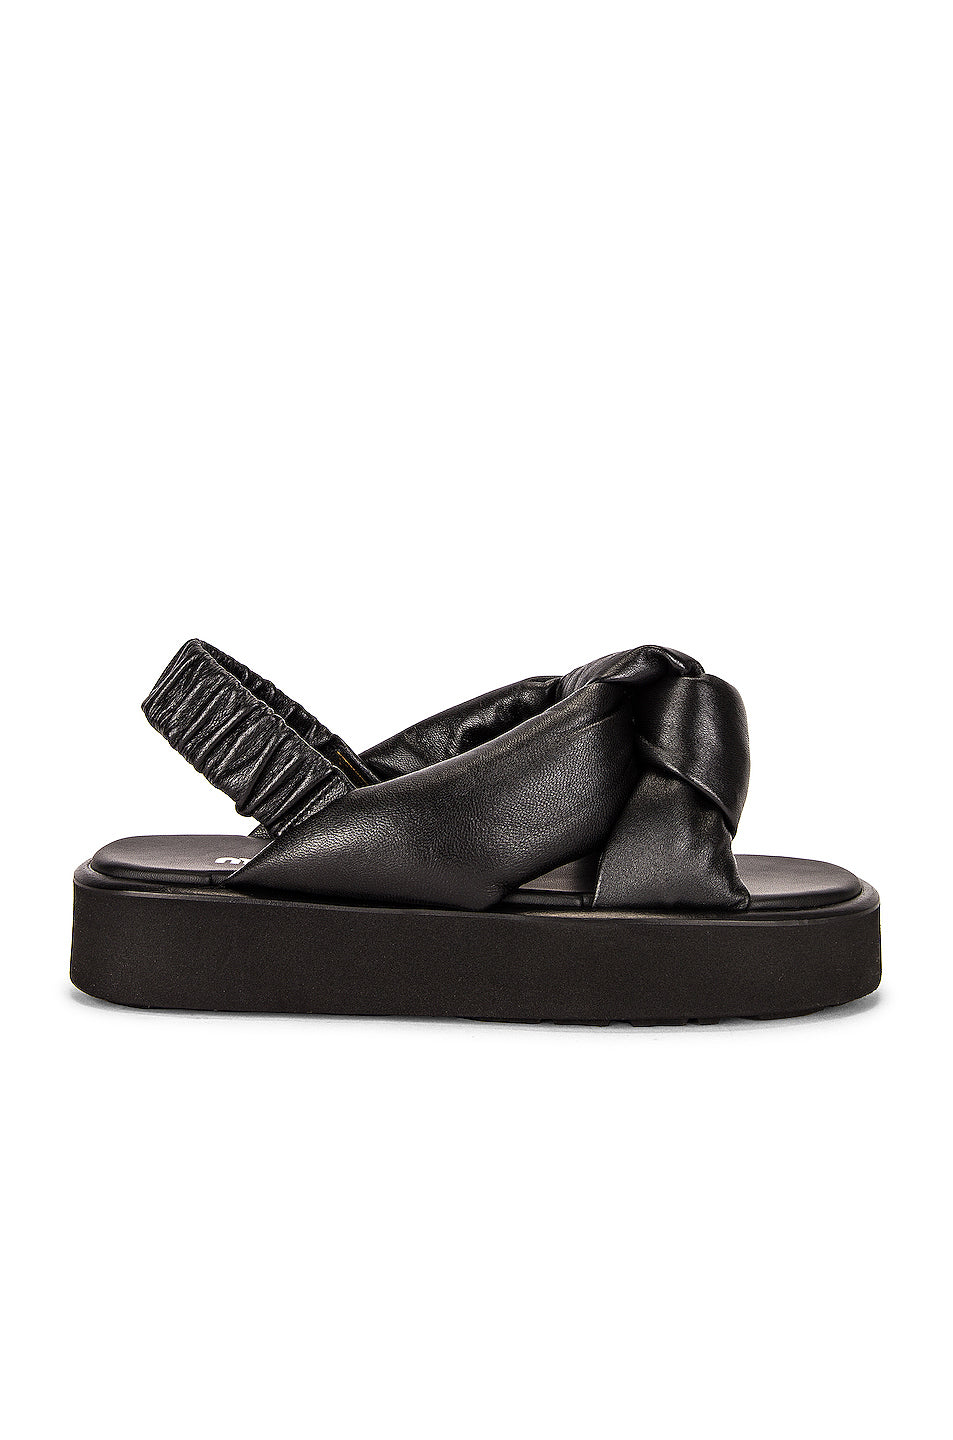 Padded Leather Flatform Sandals